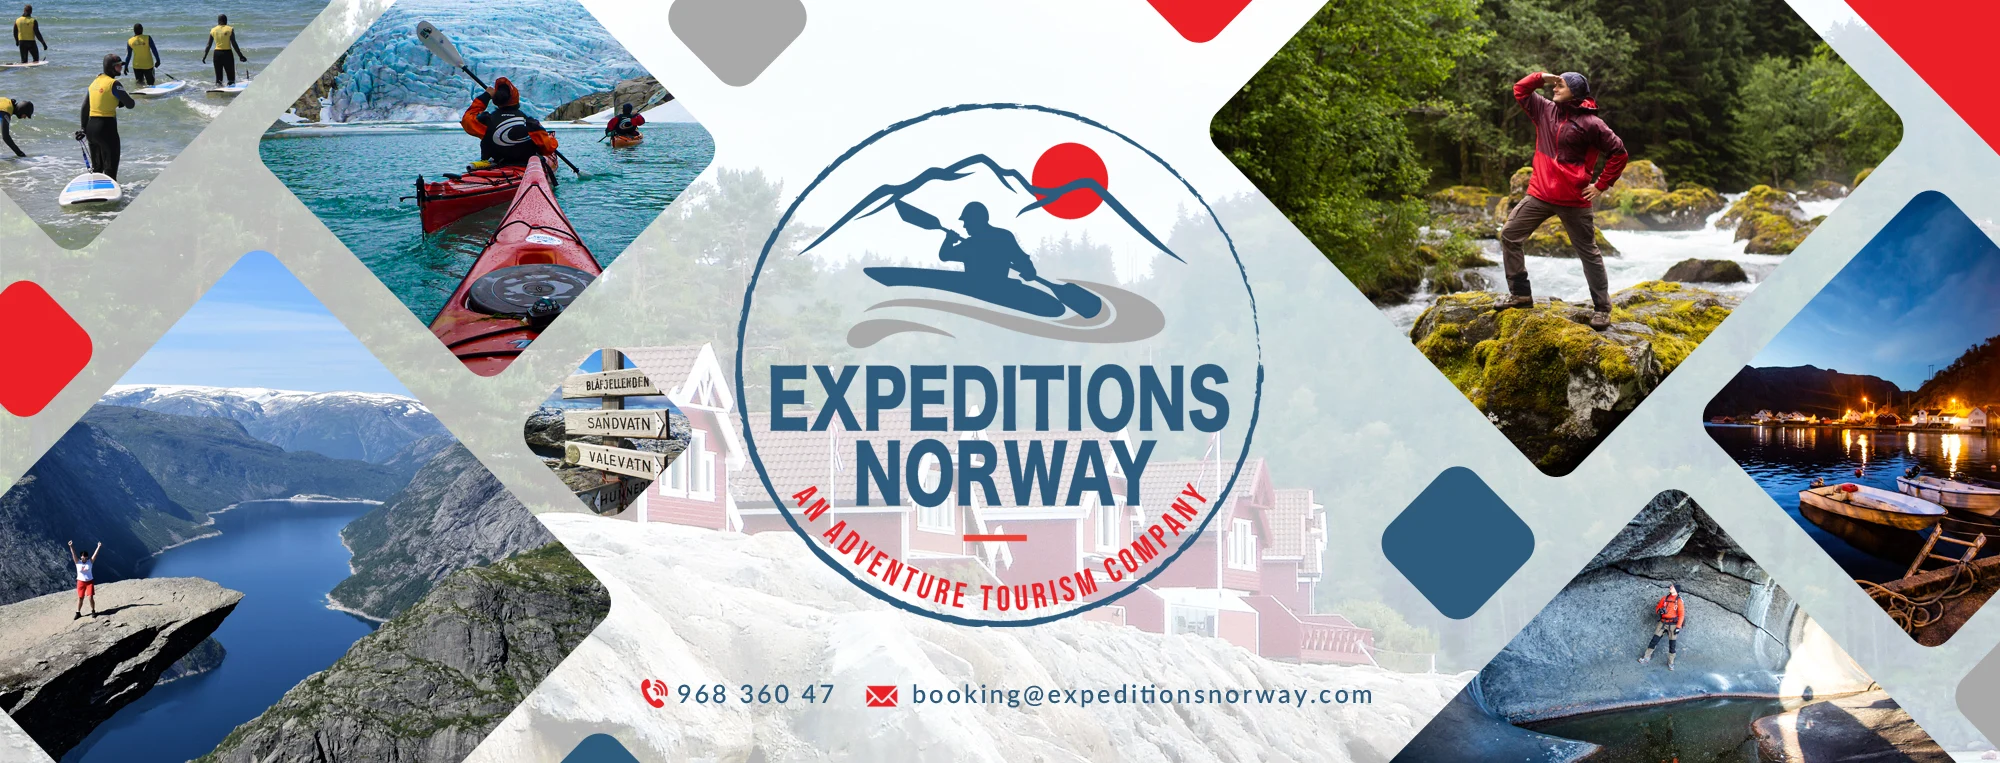 EXPEDIOTIONS NORWAY